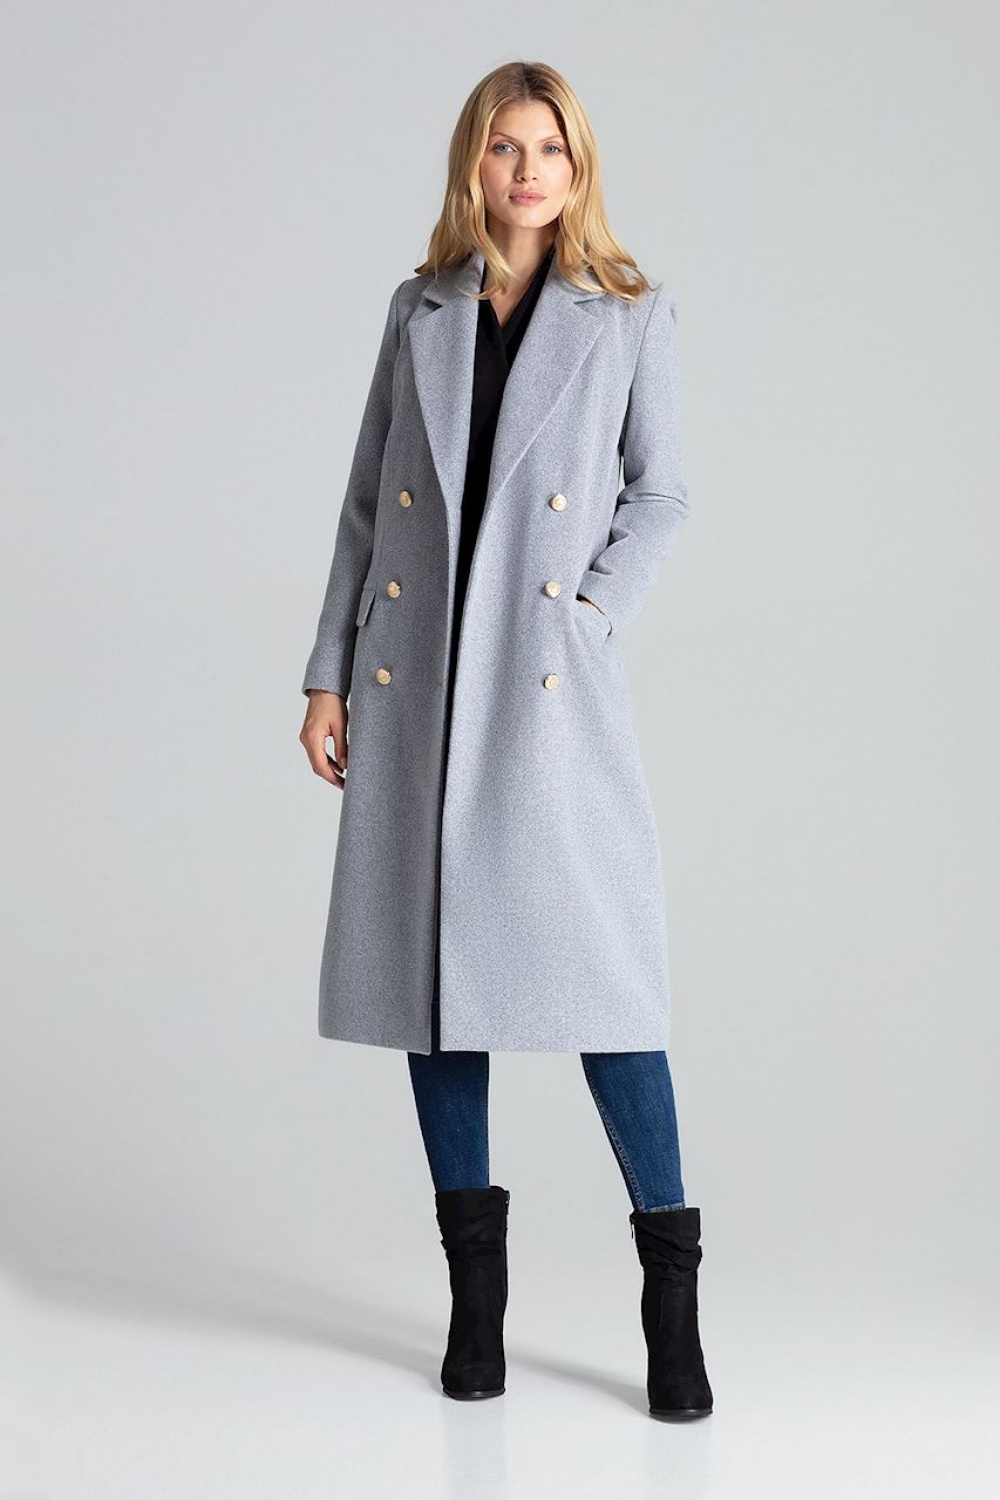 Coat model 138305 Figl grey Ladies